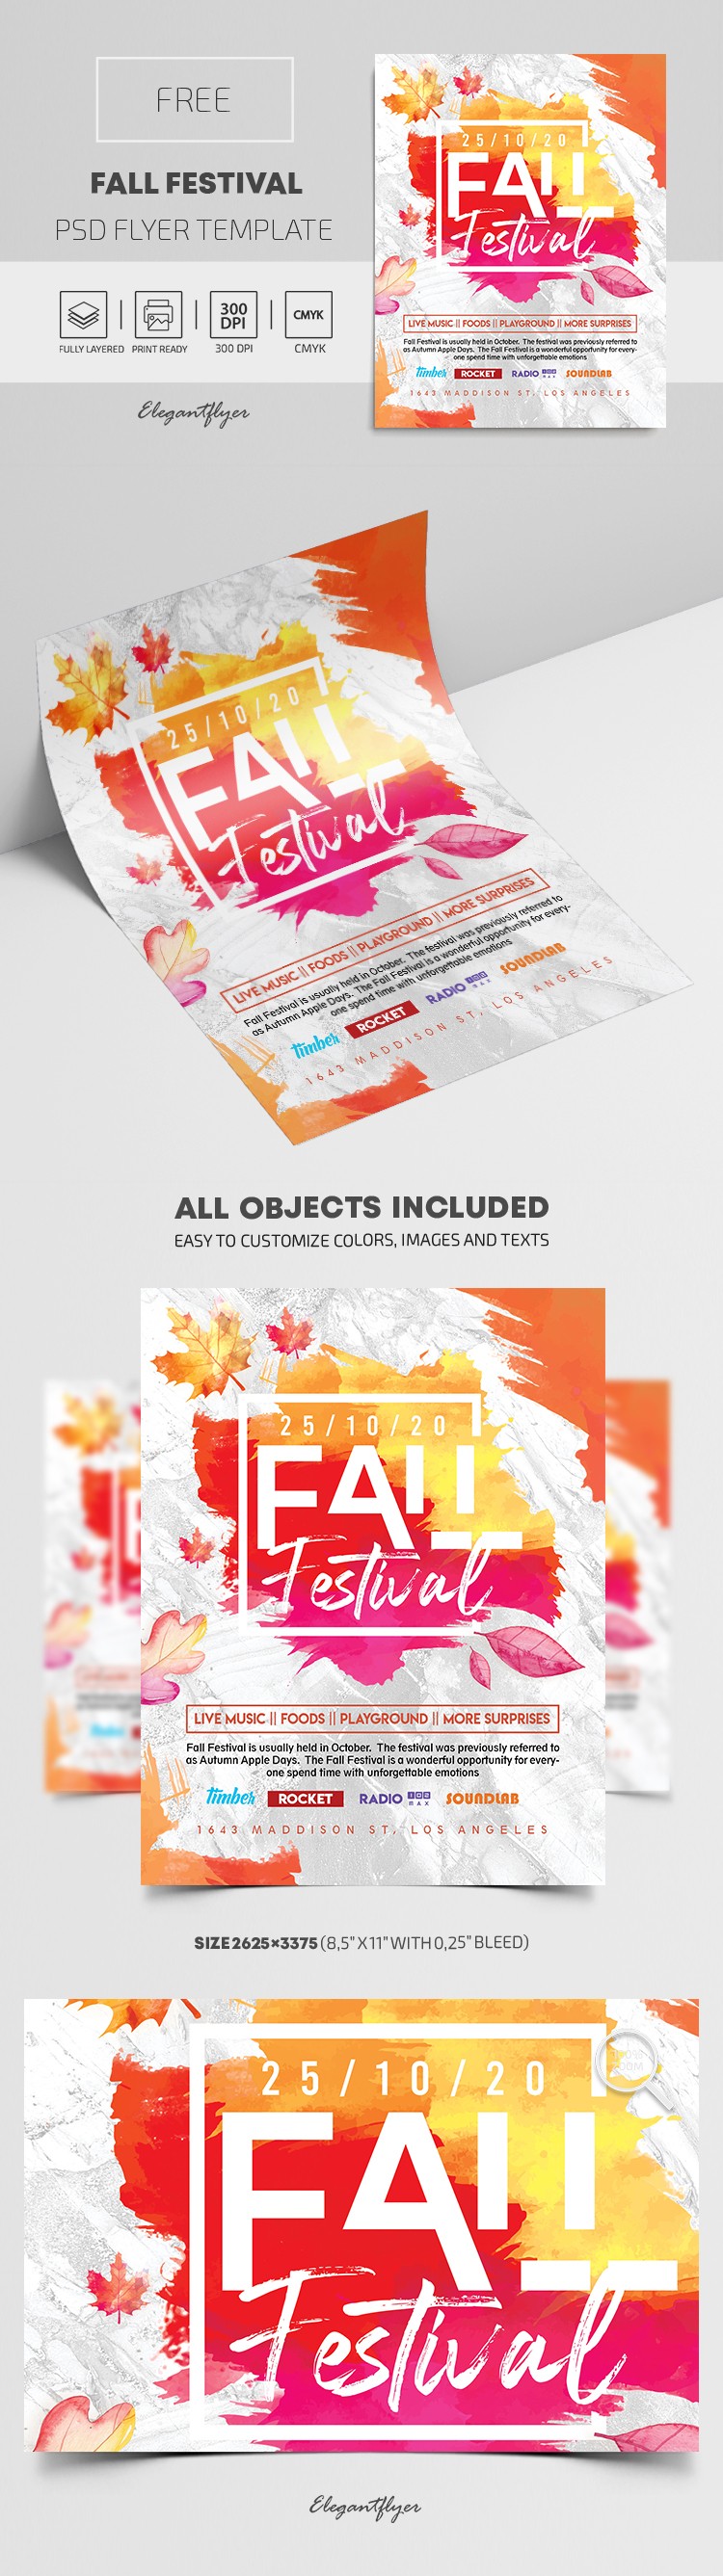 Herbstfest Flyer by ElegantFlyer